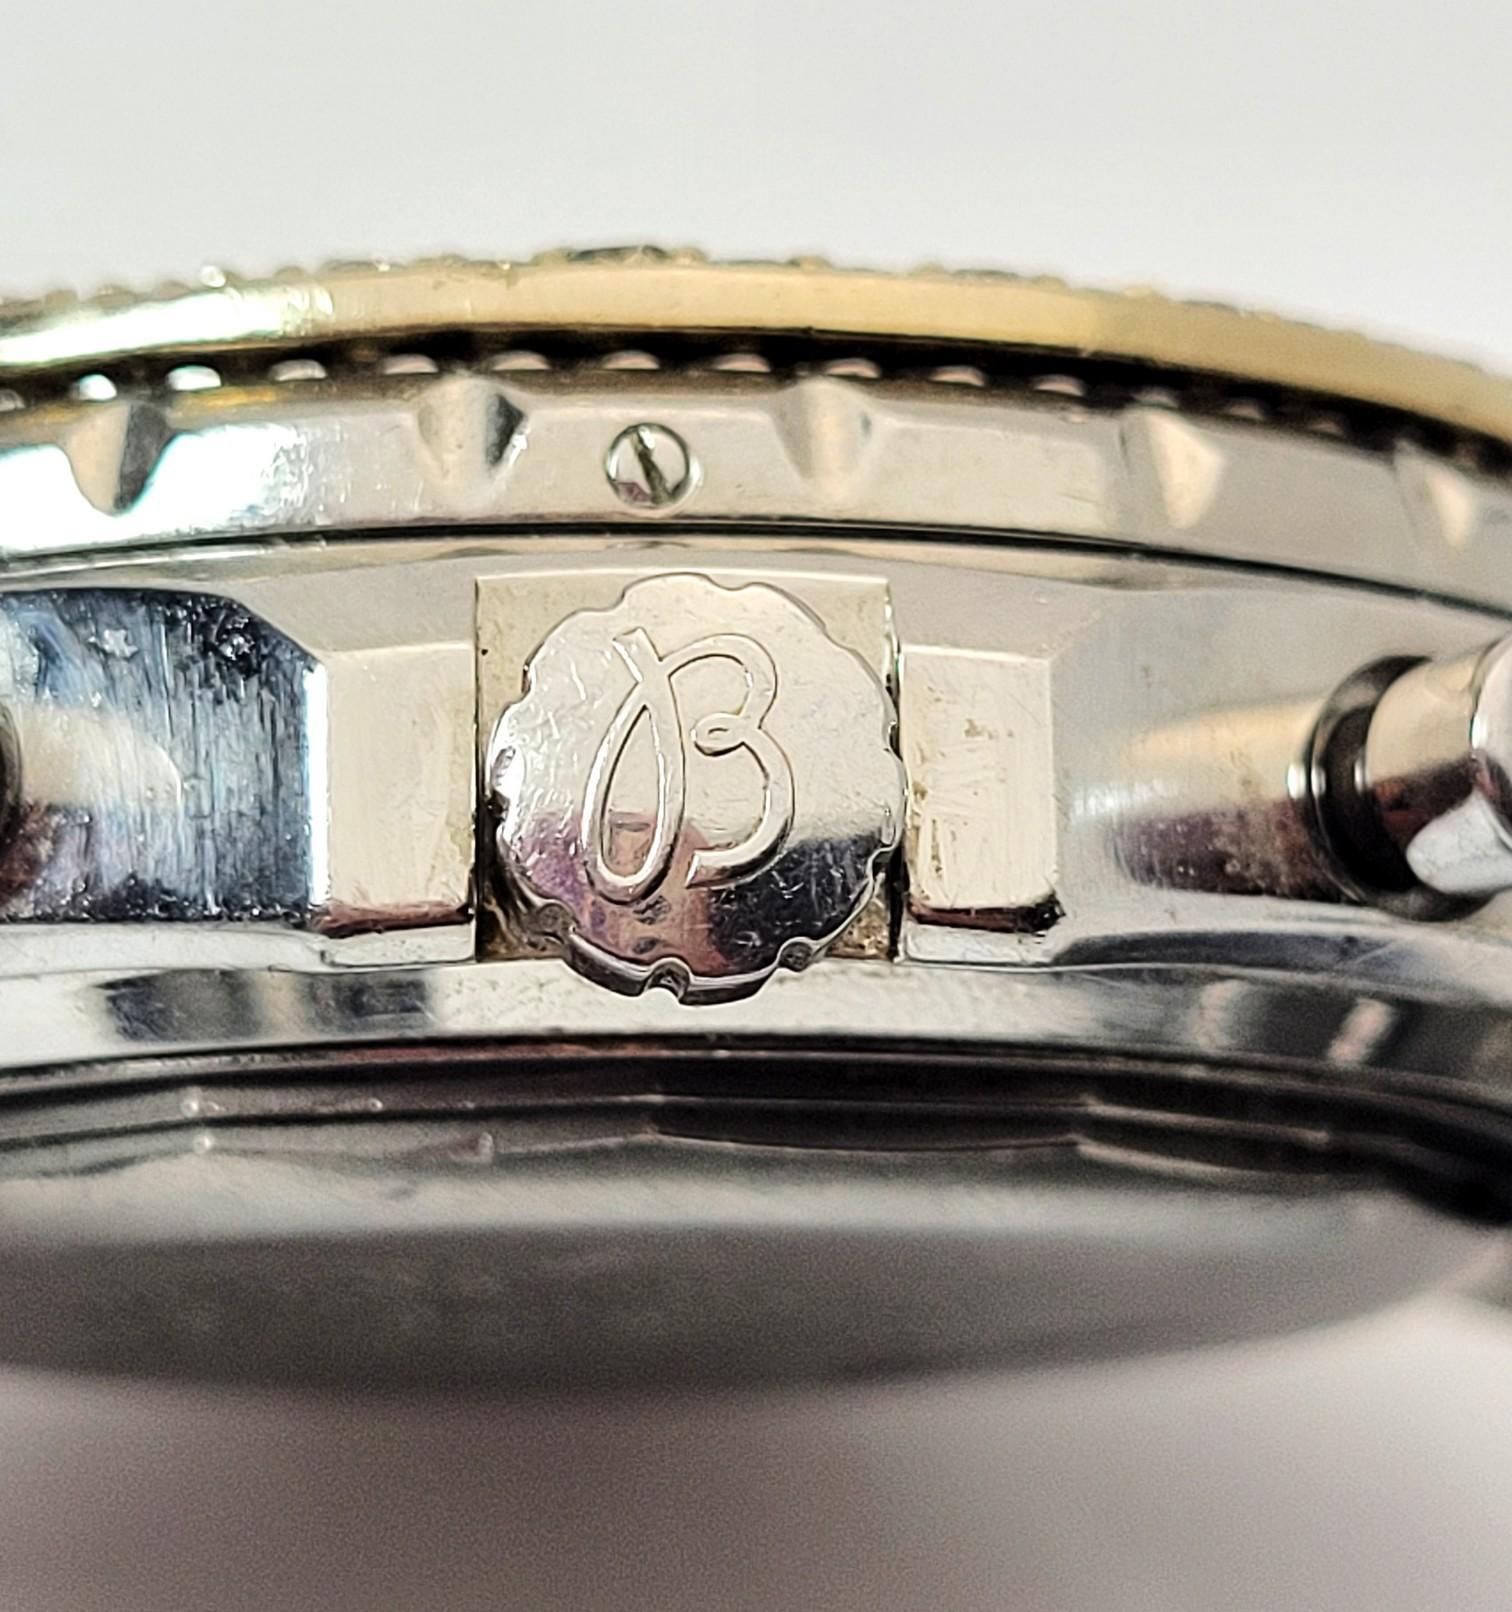 Mens Breitling Bentley Diamond Bezel St. STeel Chronograph Watch